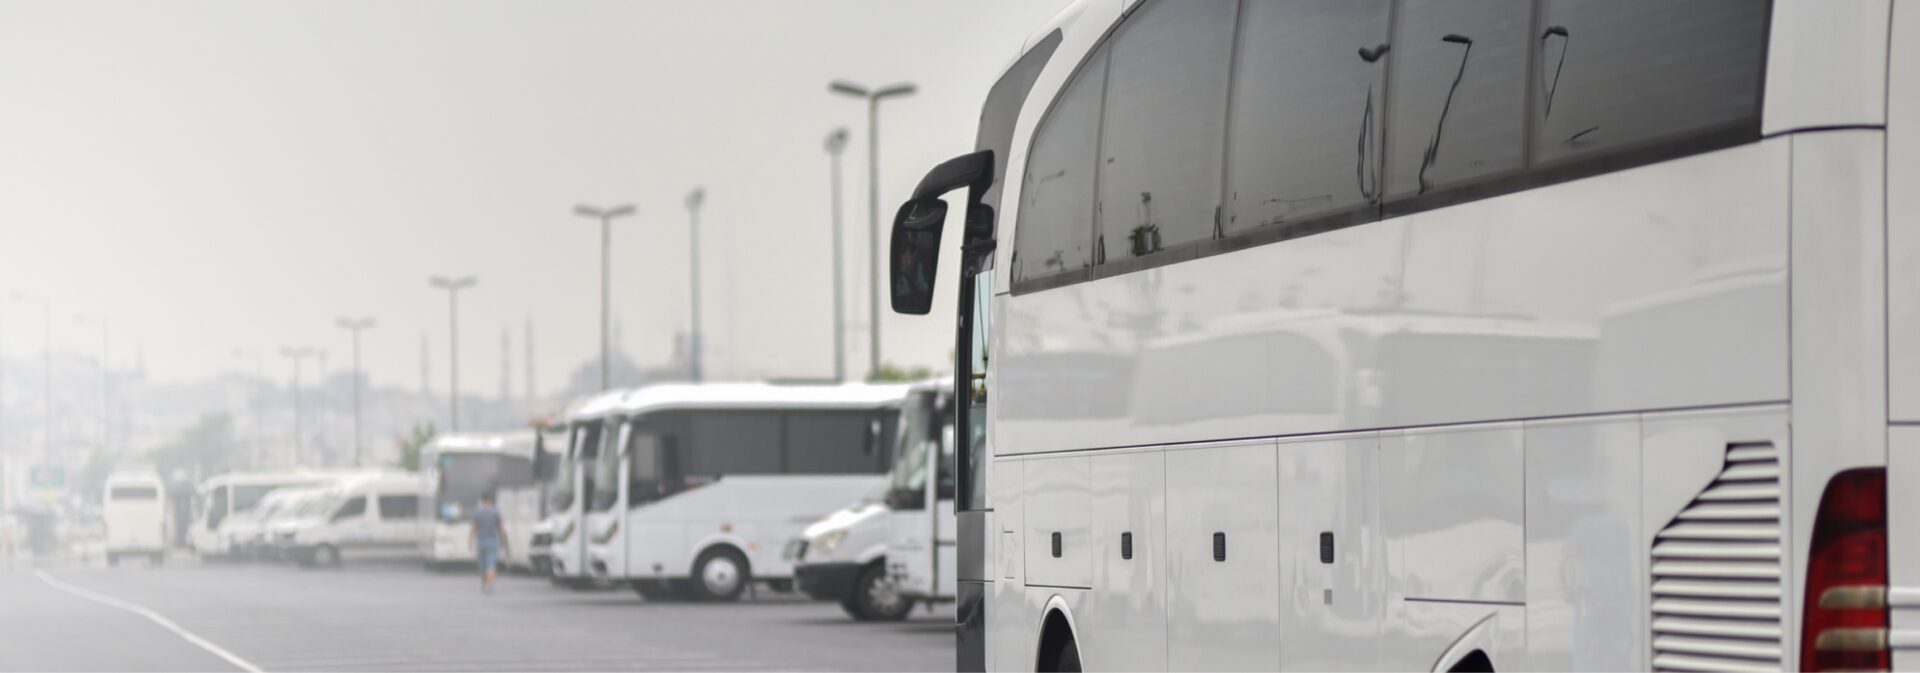 Tsokas Travel Service Bus Fleet